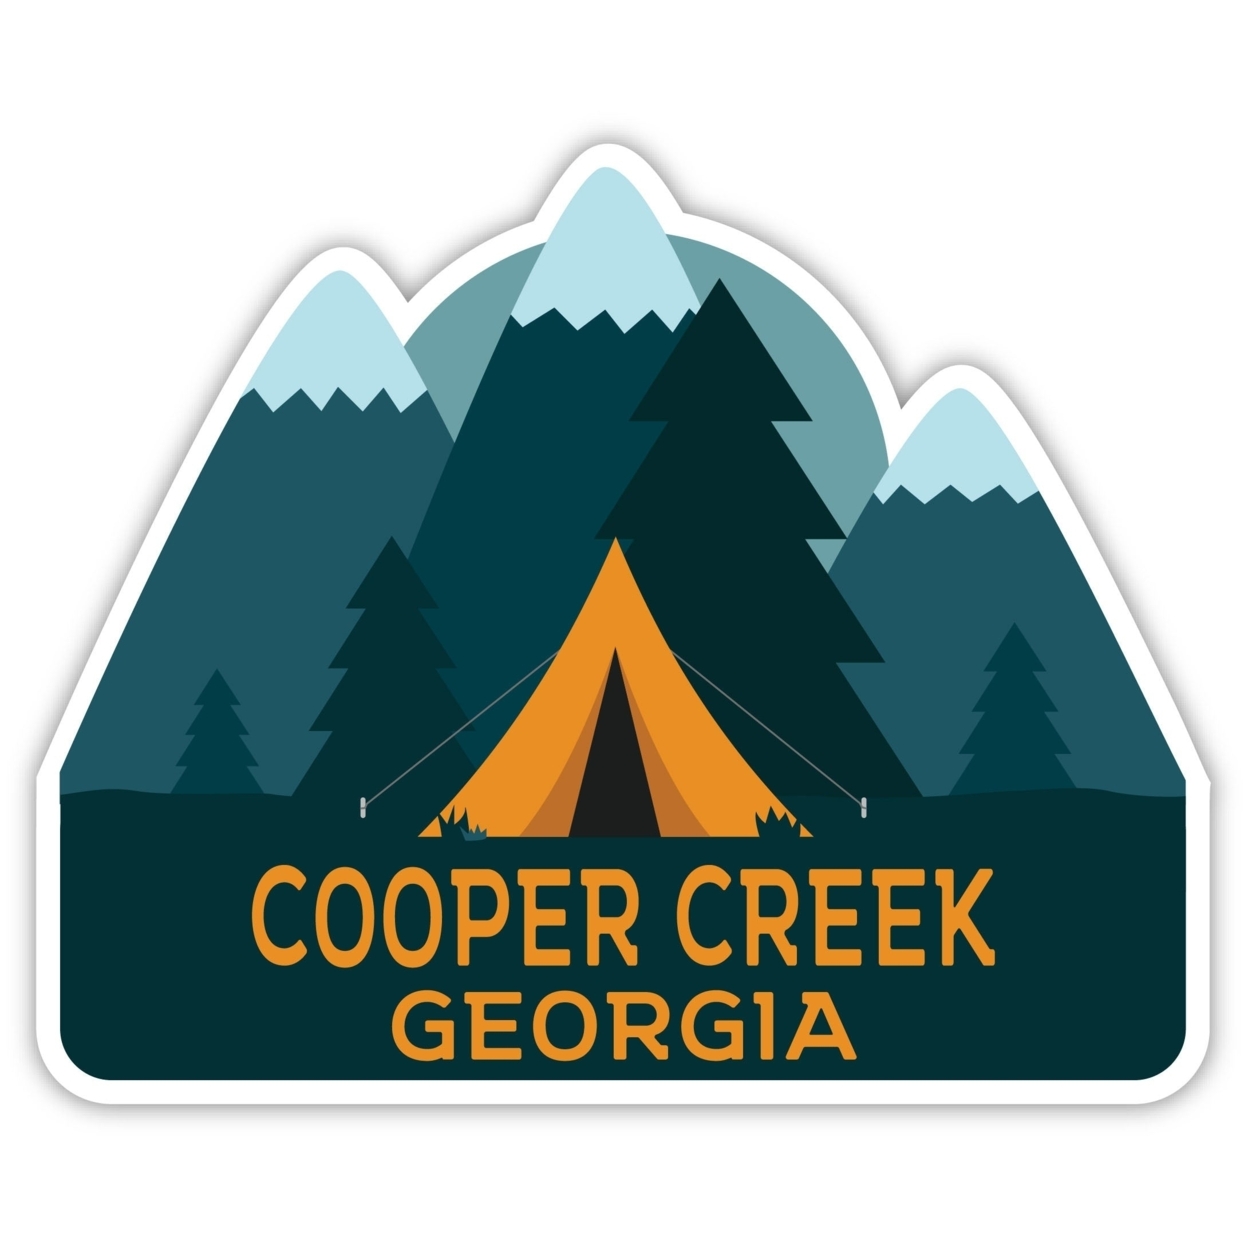 Cooper Creek Georgia Souvenir Decorative Stickers (Choose Theme And Size) - 4-Pack, 4-Inch, Tent